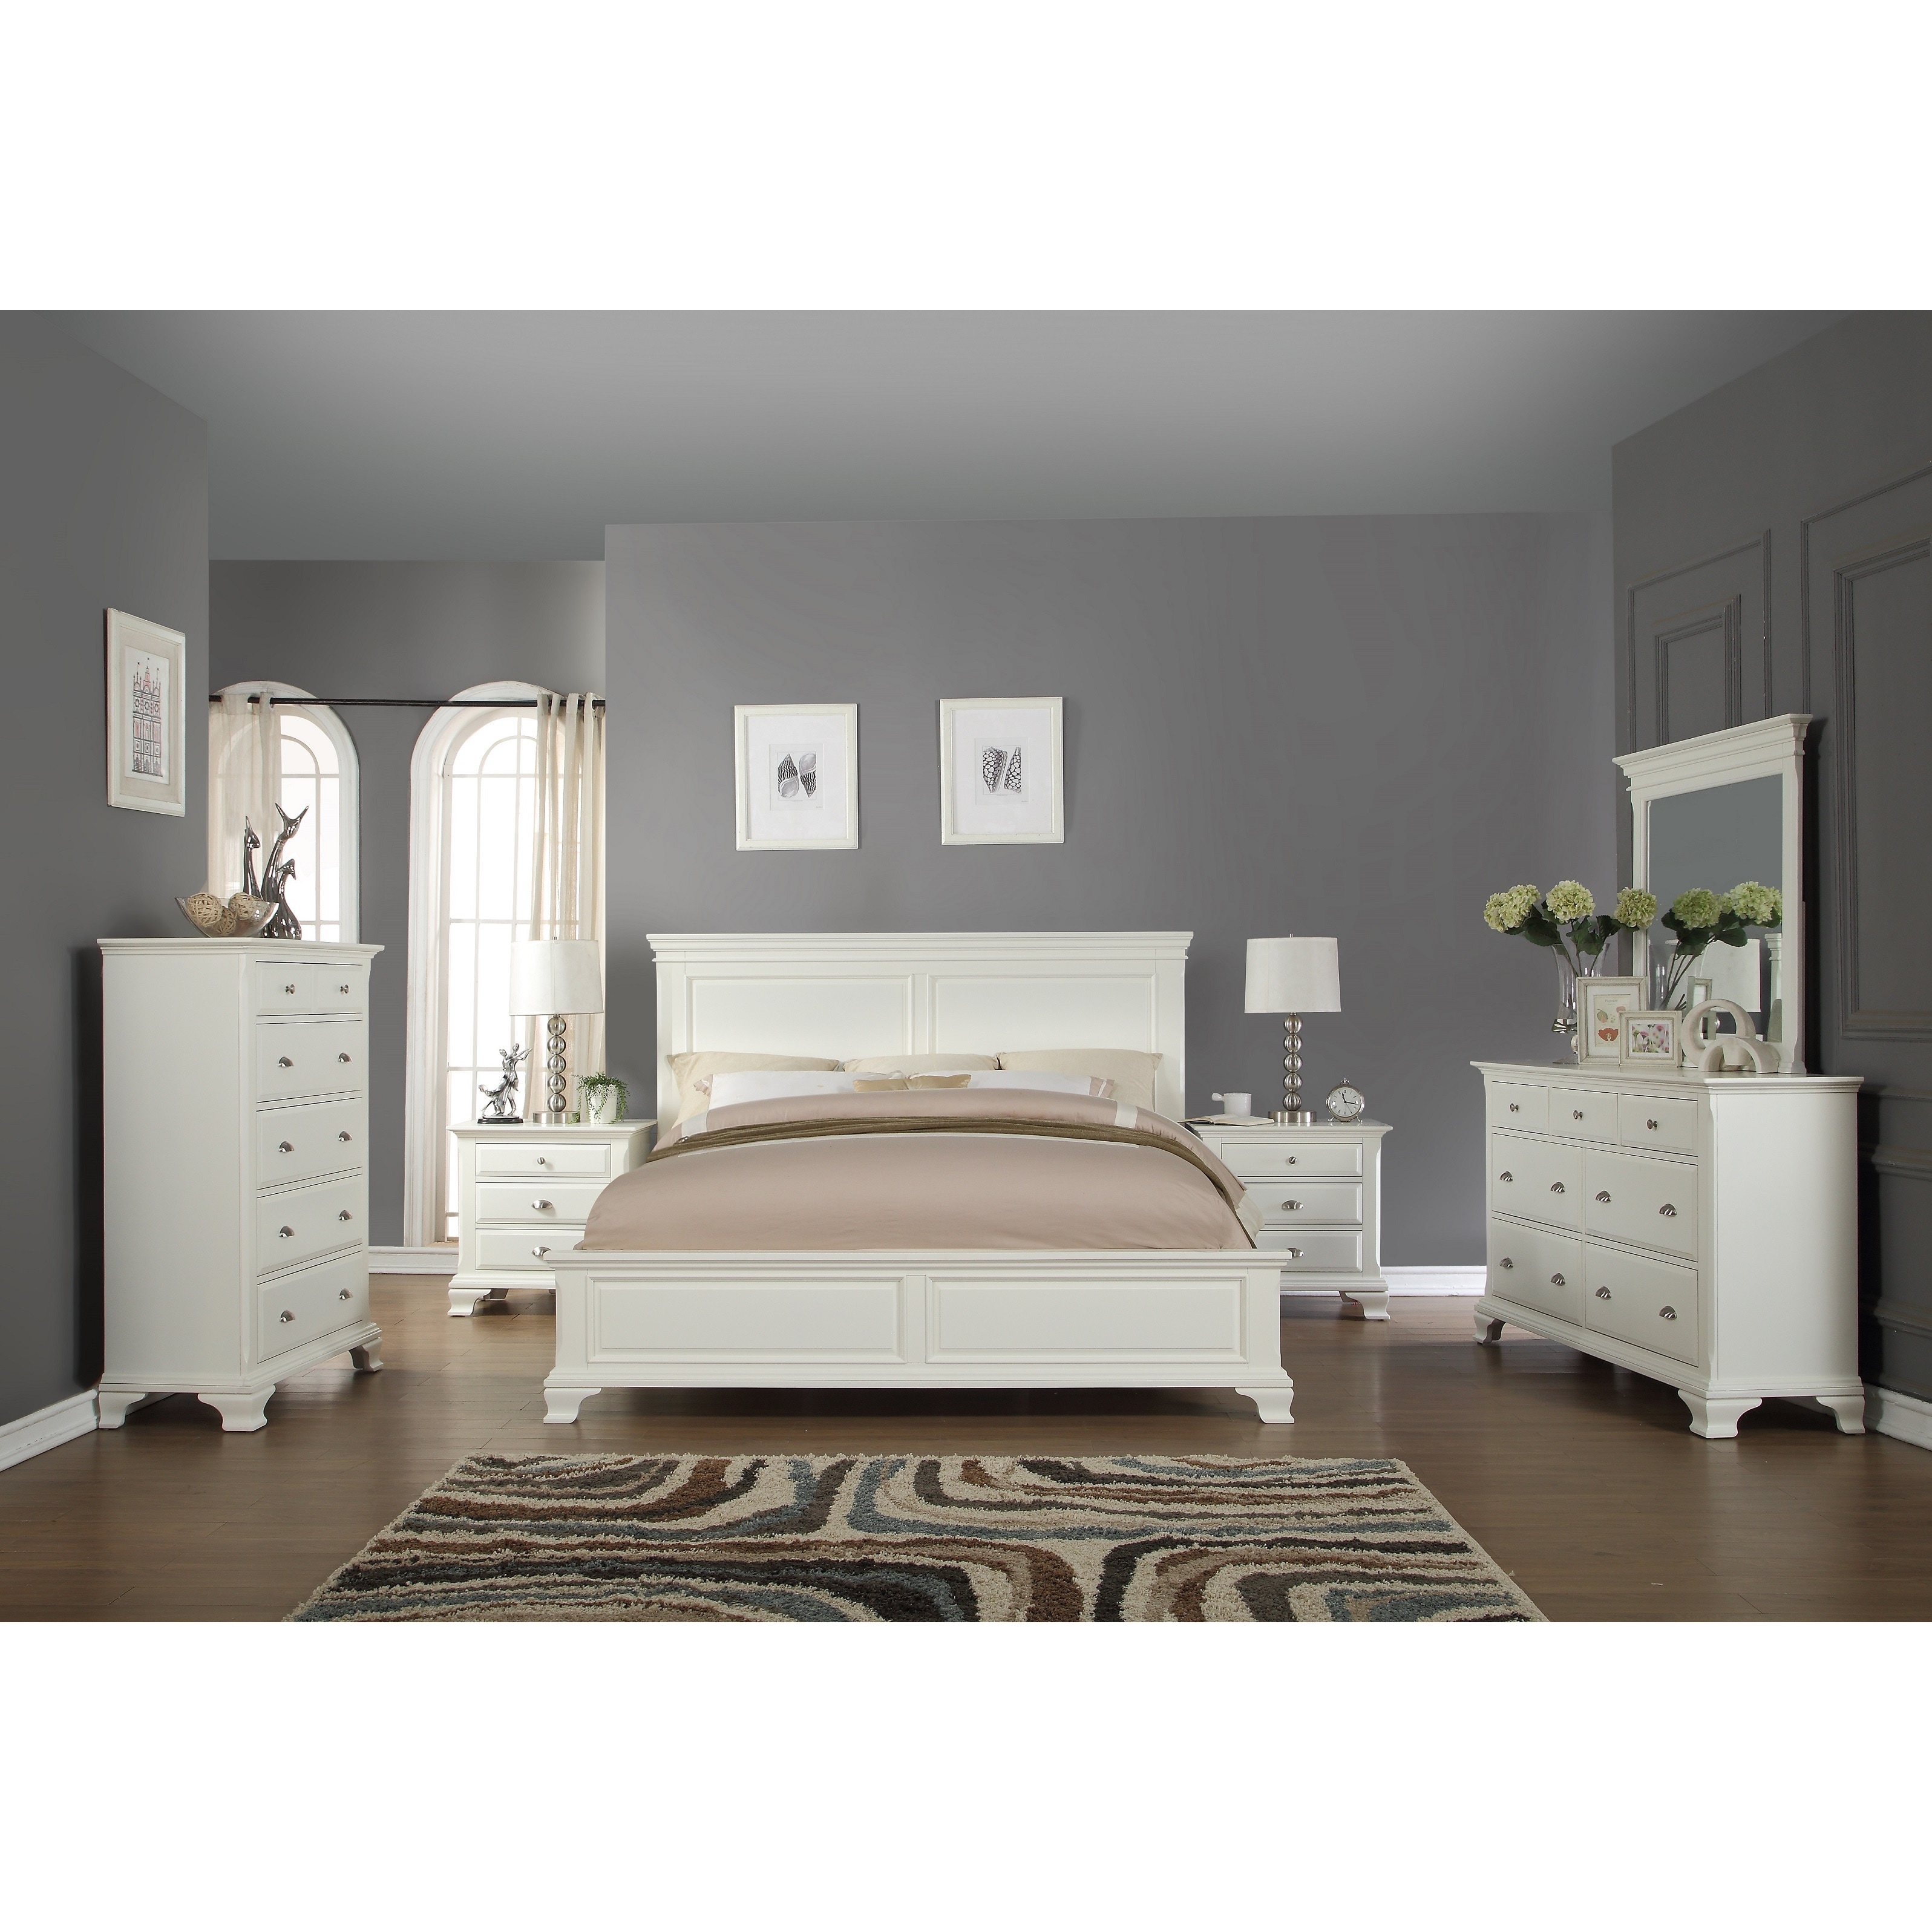 Laveno White Wood King 6-piece Bedroom Furniture Set